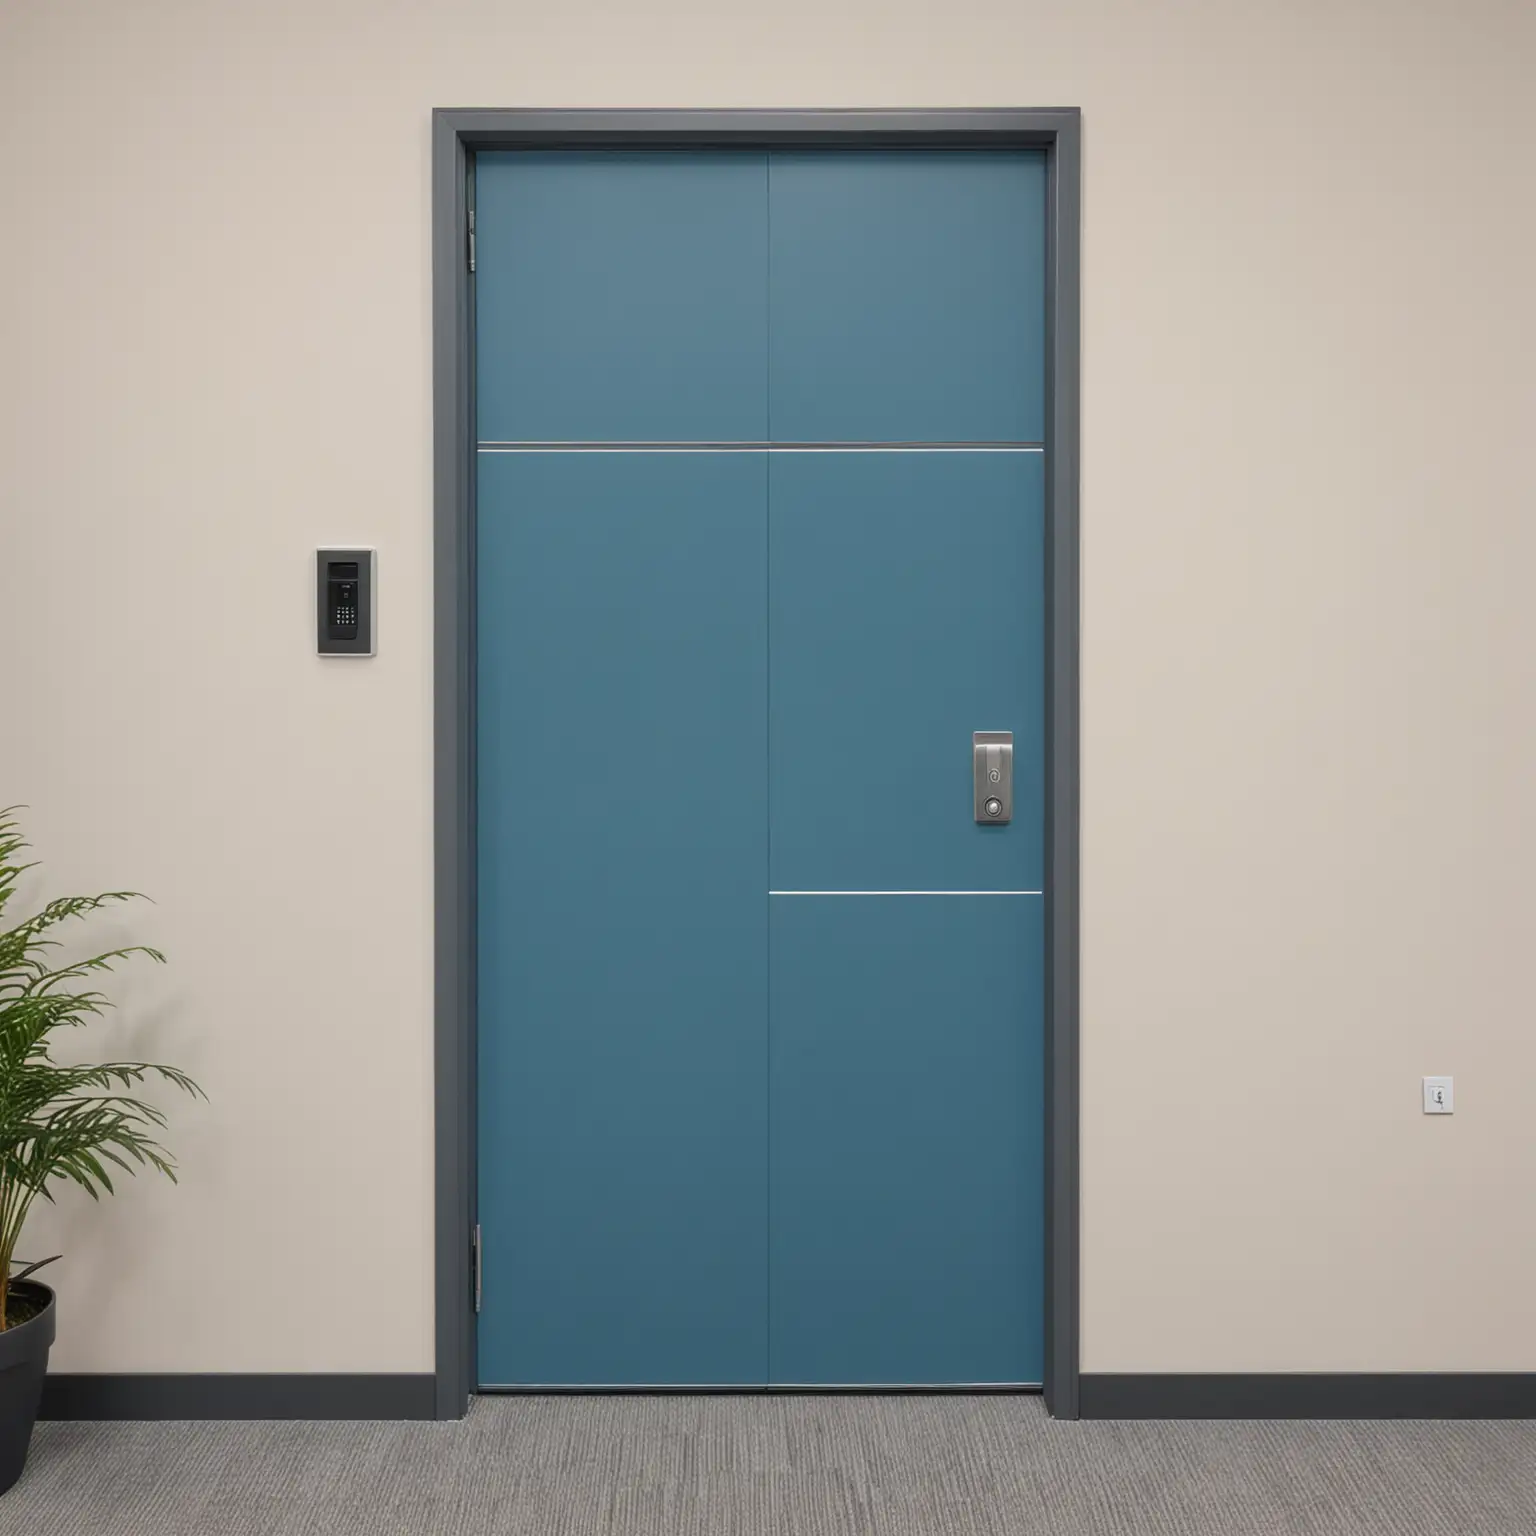 keyless doors in an office setting blue